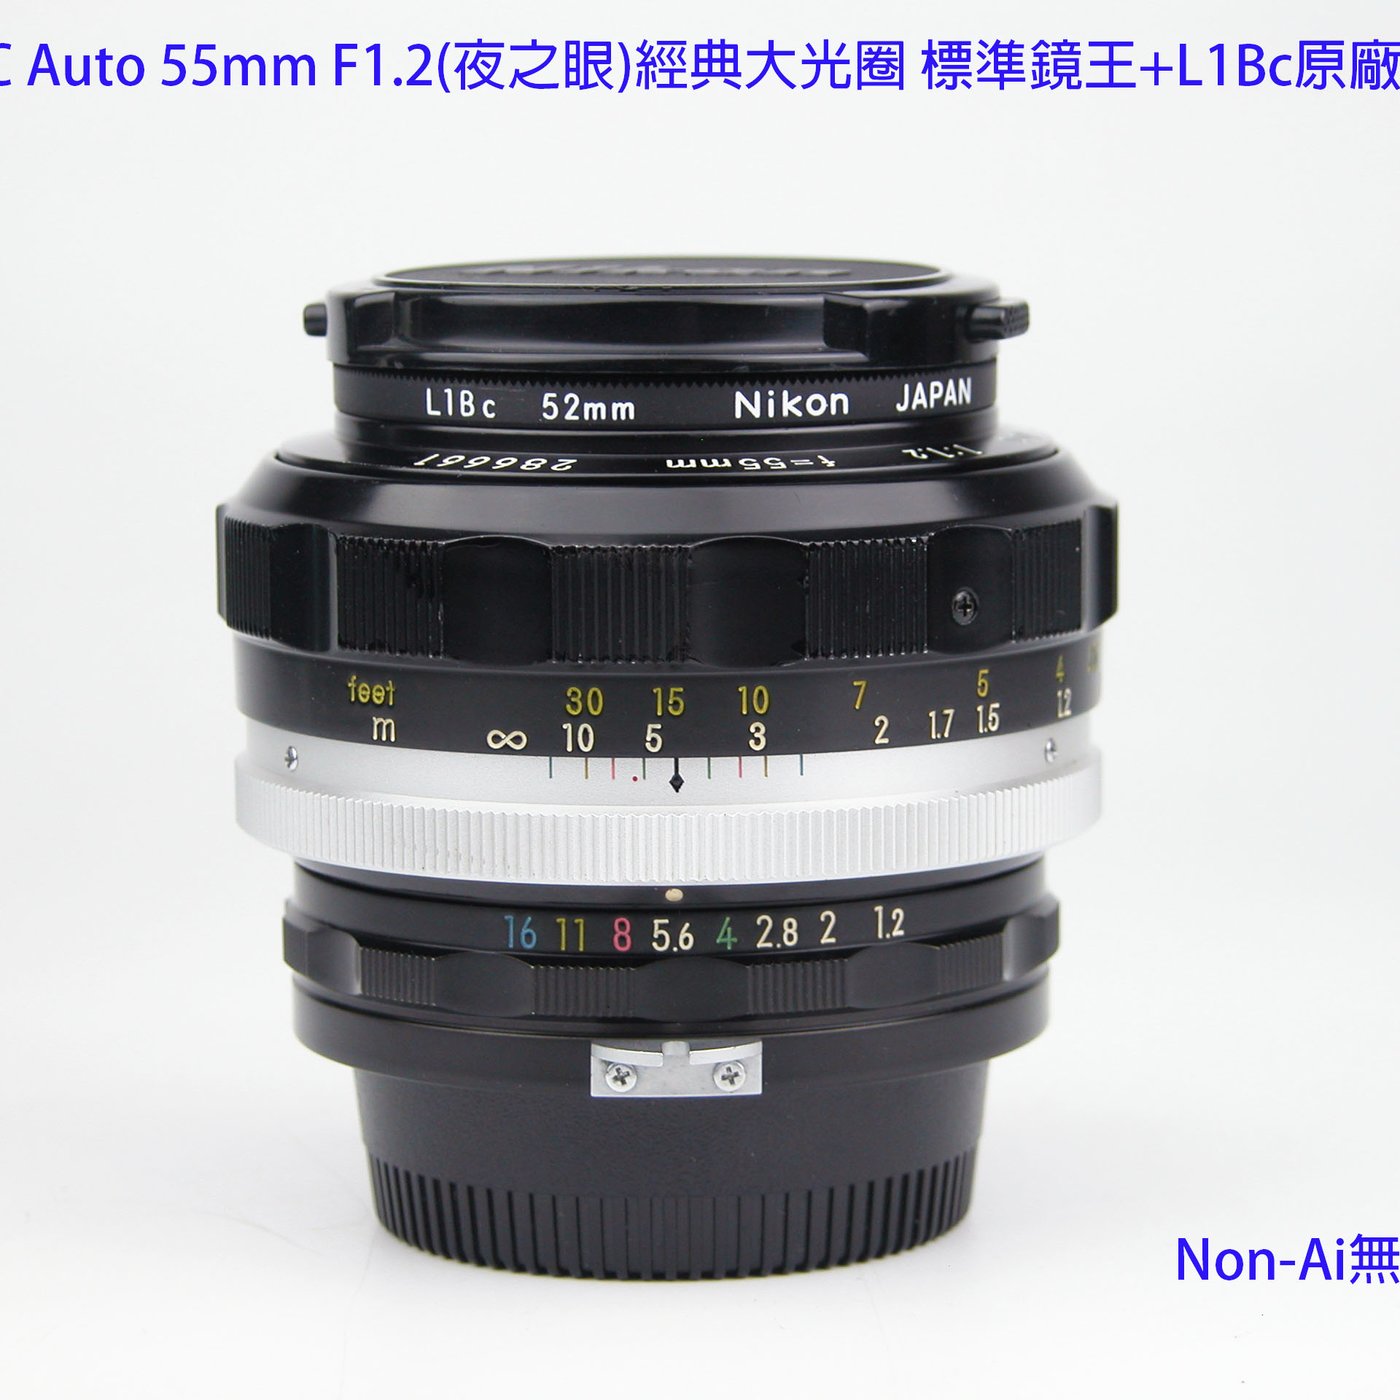 Nikon S.C Auto 55mm F1.2(夜之眼)經典大光圈標準鏡王+L1Bc原廠濾鏡美品| Yahoo奇摩拍賣